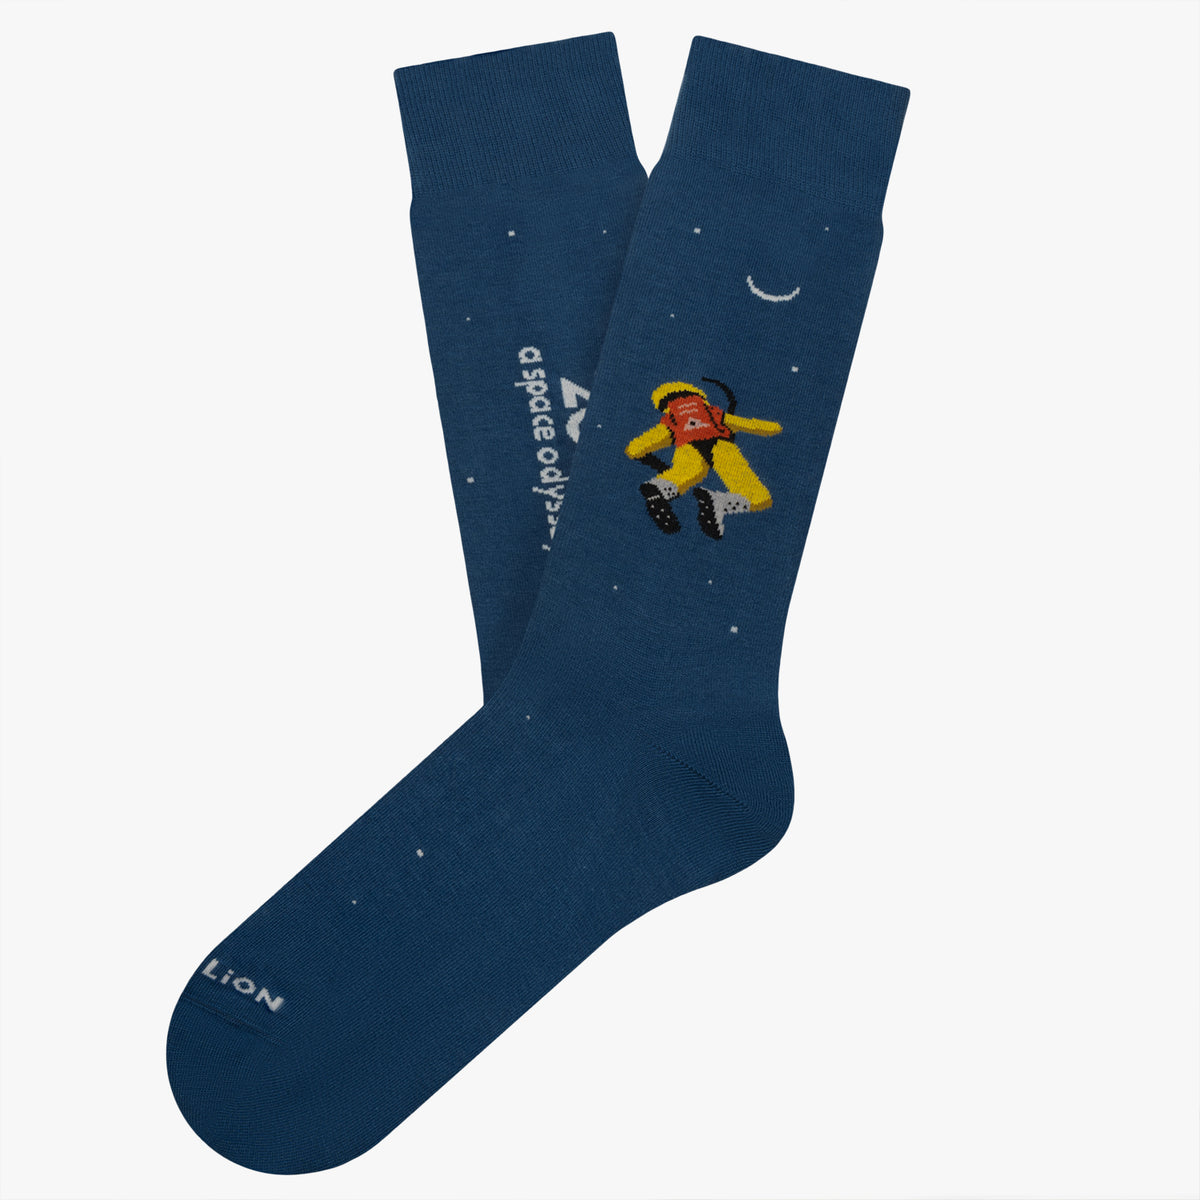 2001: A Space Odyssey - Astronaut Socks - By Jimmy Lion